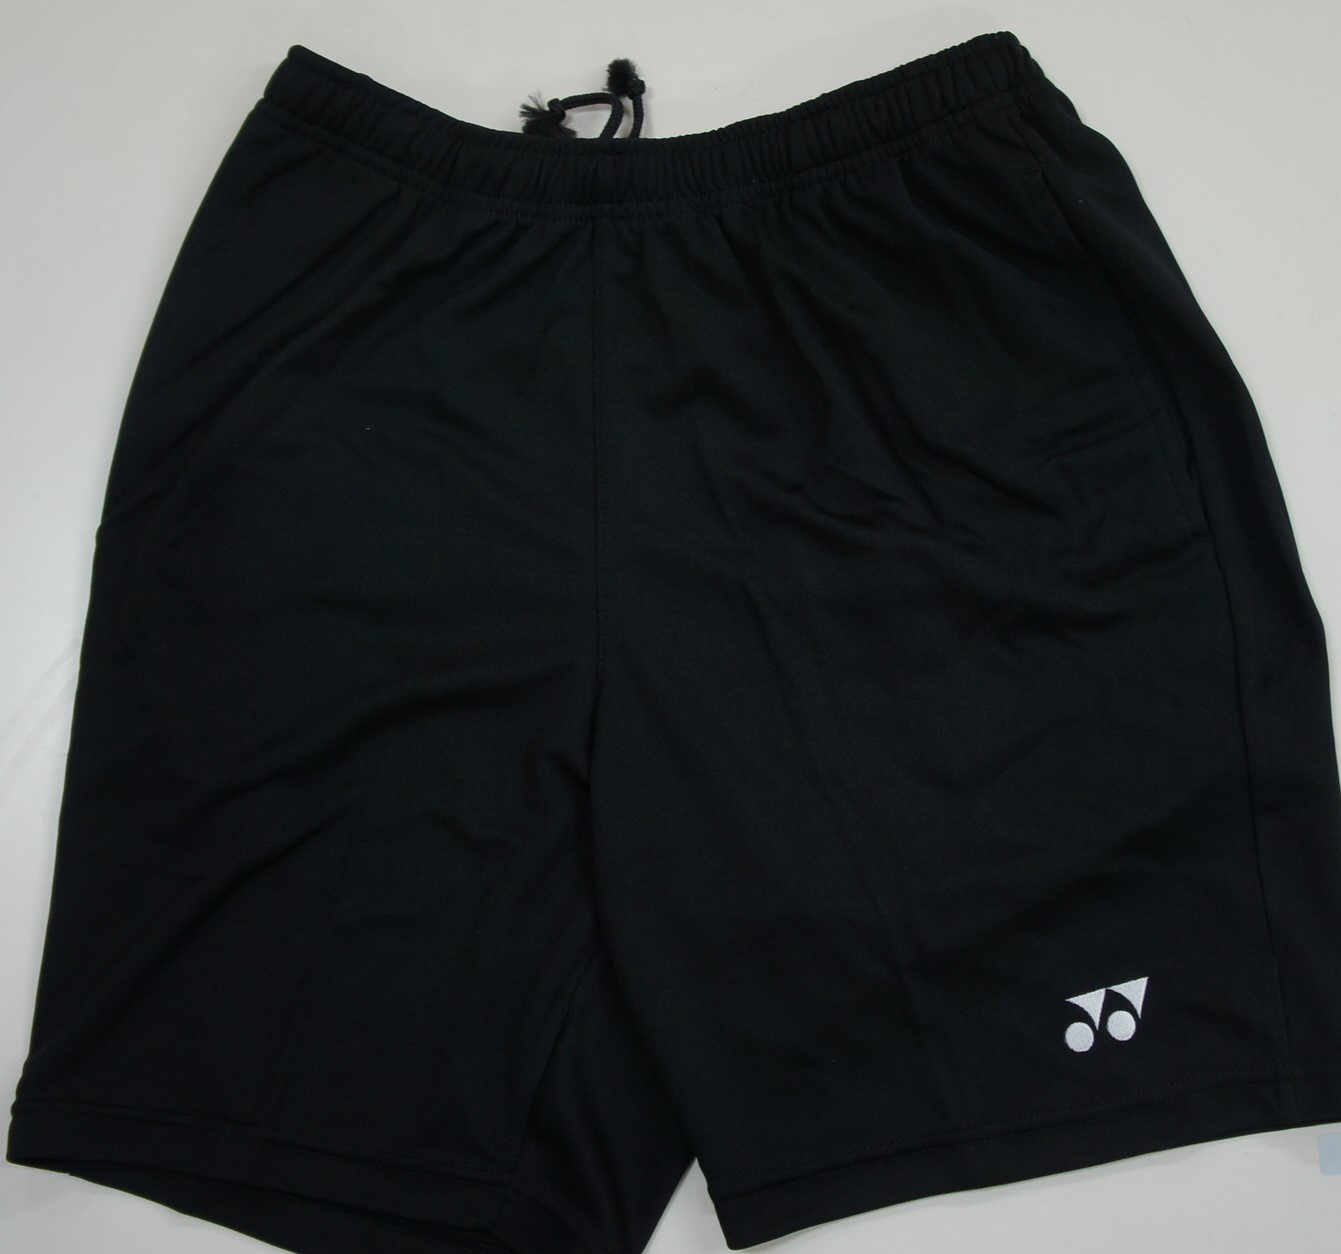 Yonex Mens Shorts 12019TR-007 Black, Made in Taiwan